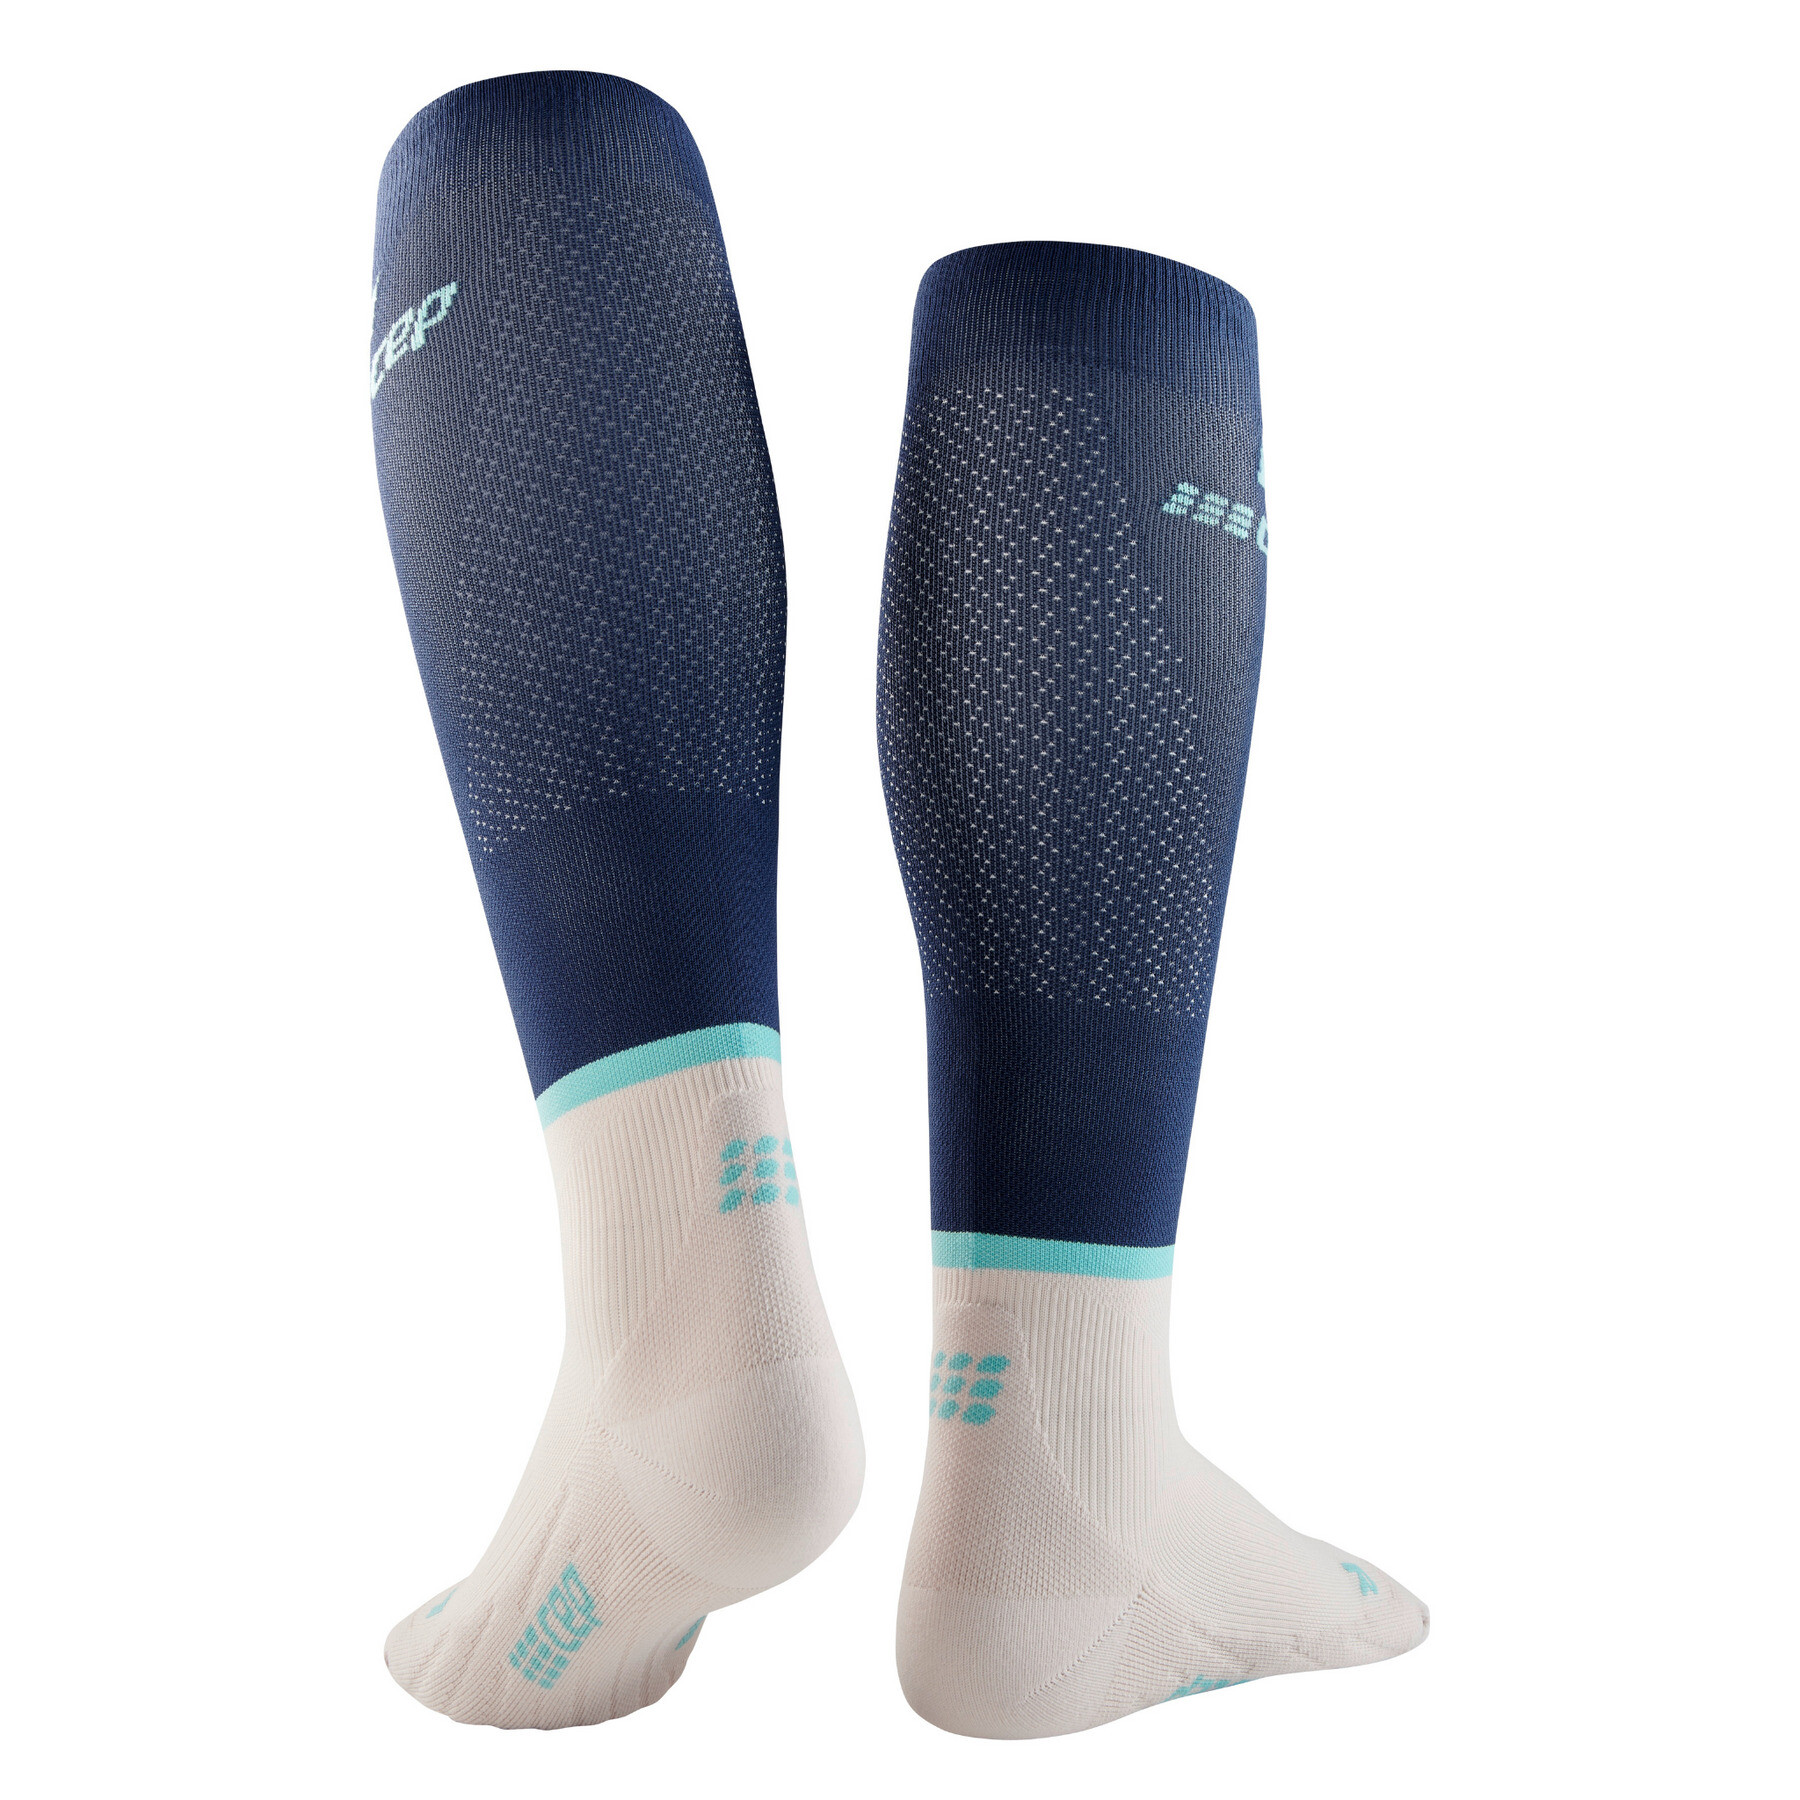 The run socks compression socks, tall v4 CEP Compression